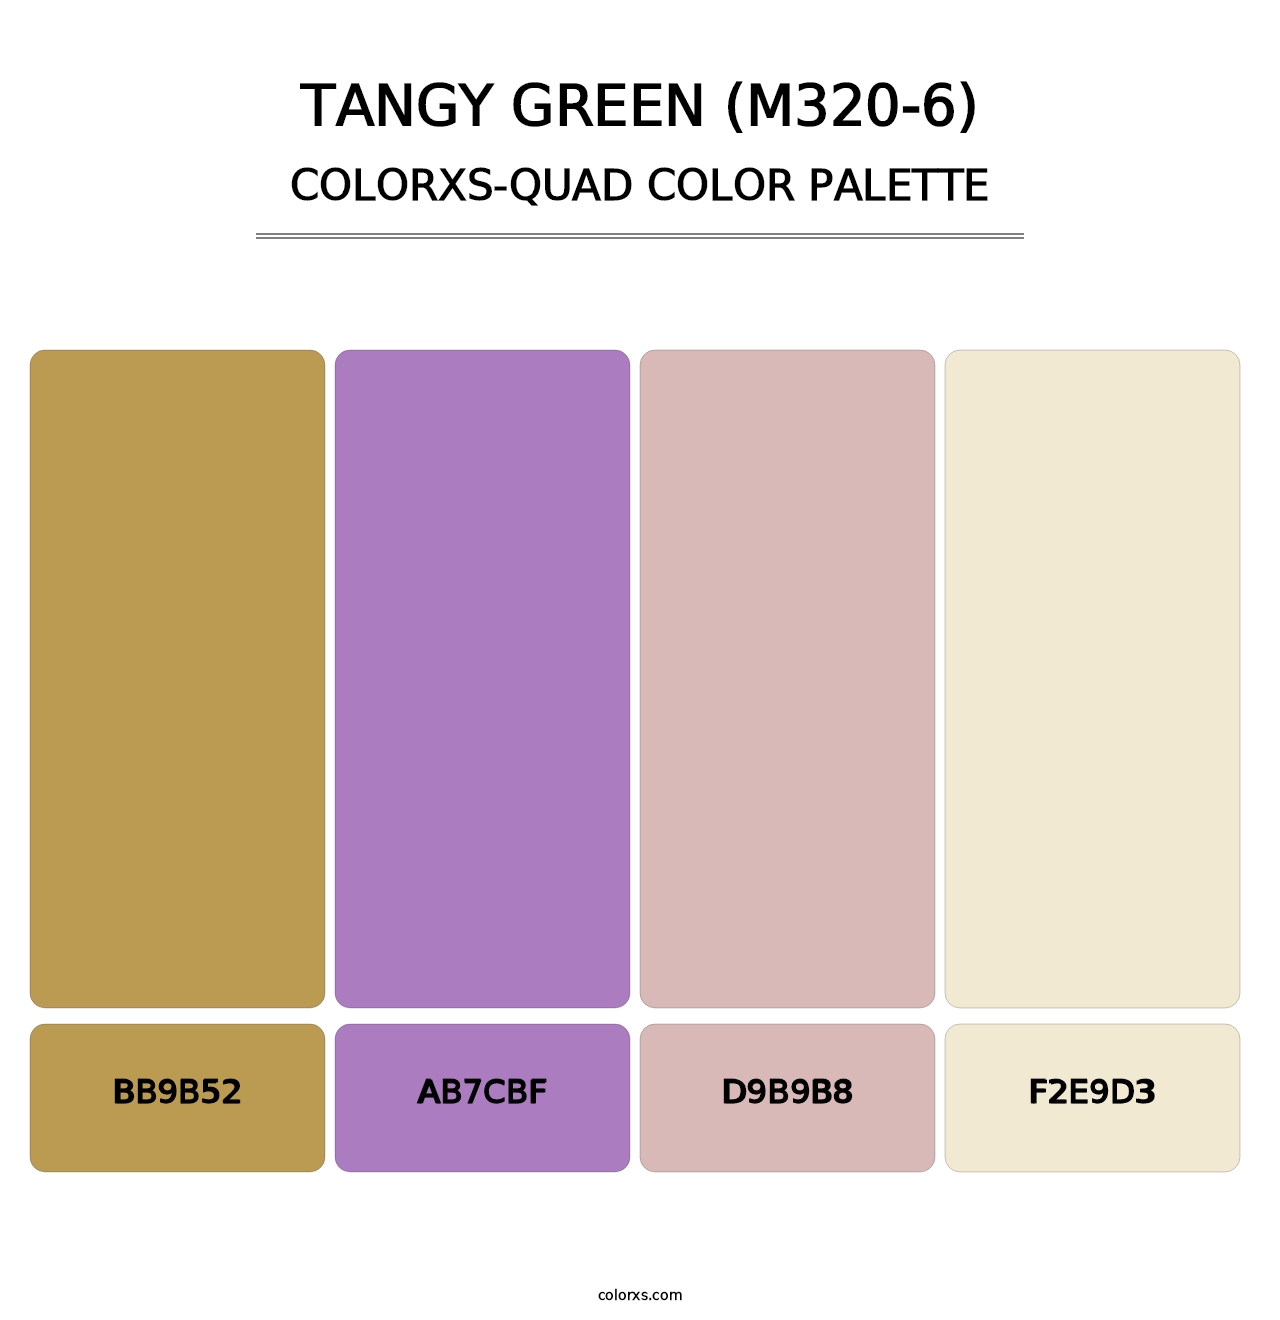 Tangy Green (M320-6) - Colorxs Quad Palette